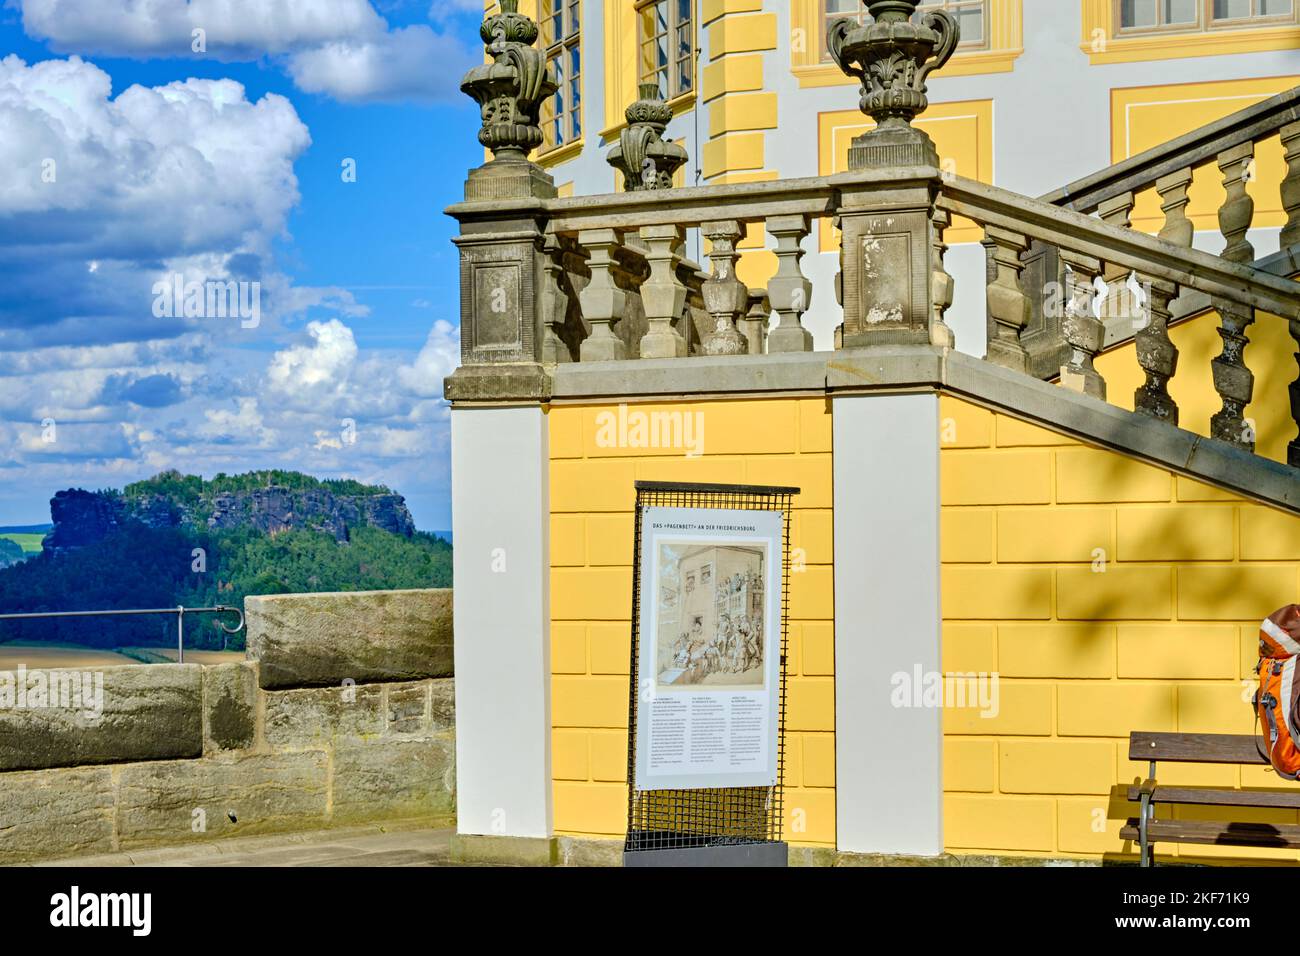 Castillo de Fredericks, Fortaleza de Königstein, Königstein, Suiza sajona, Sajonia, Alemania. Foto de stock